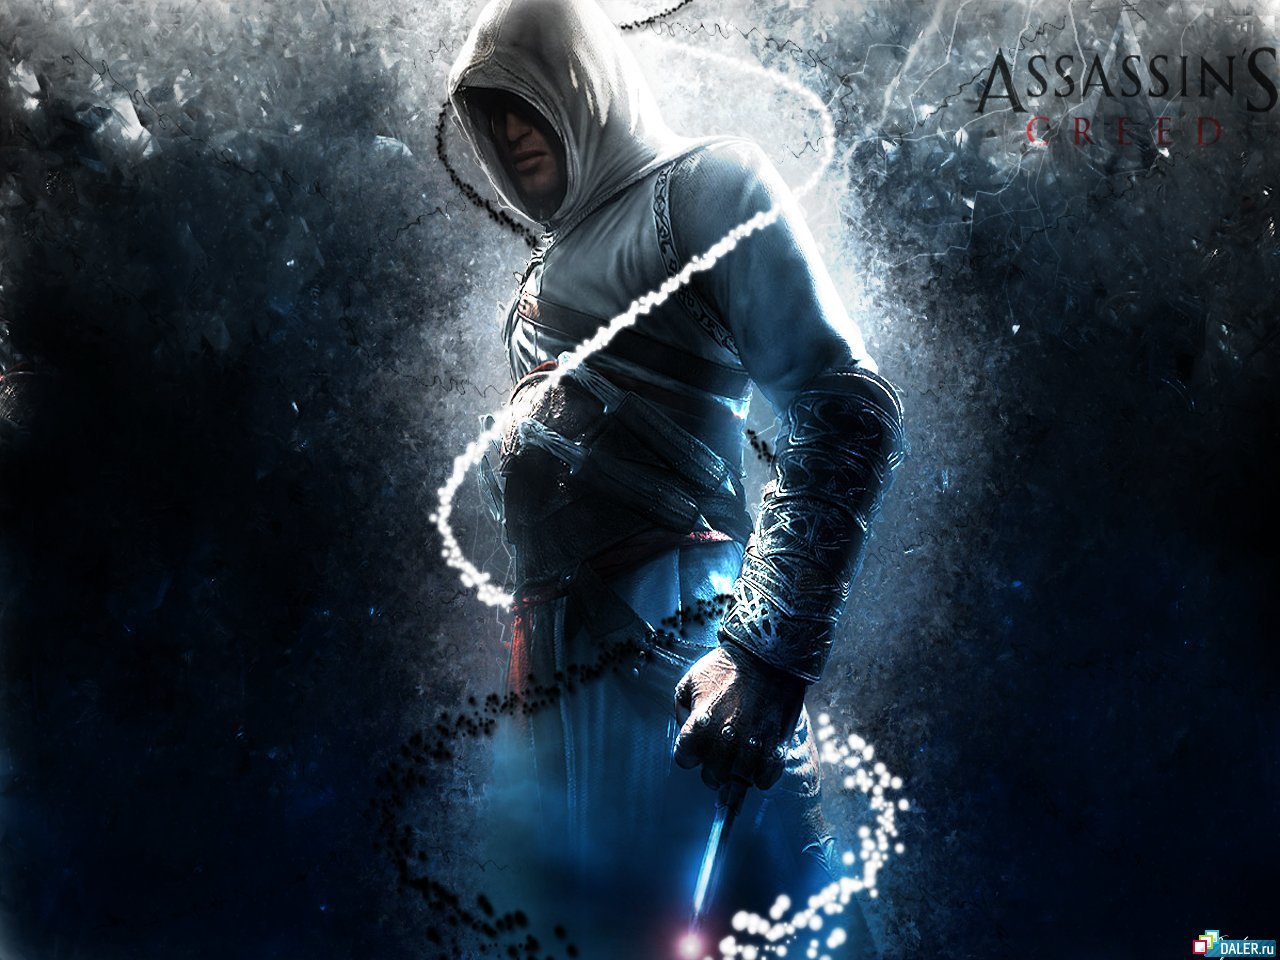 47+] Assassins Creed Wallpaper HD - WallpaperSafari